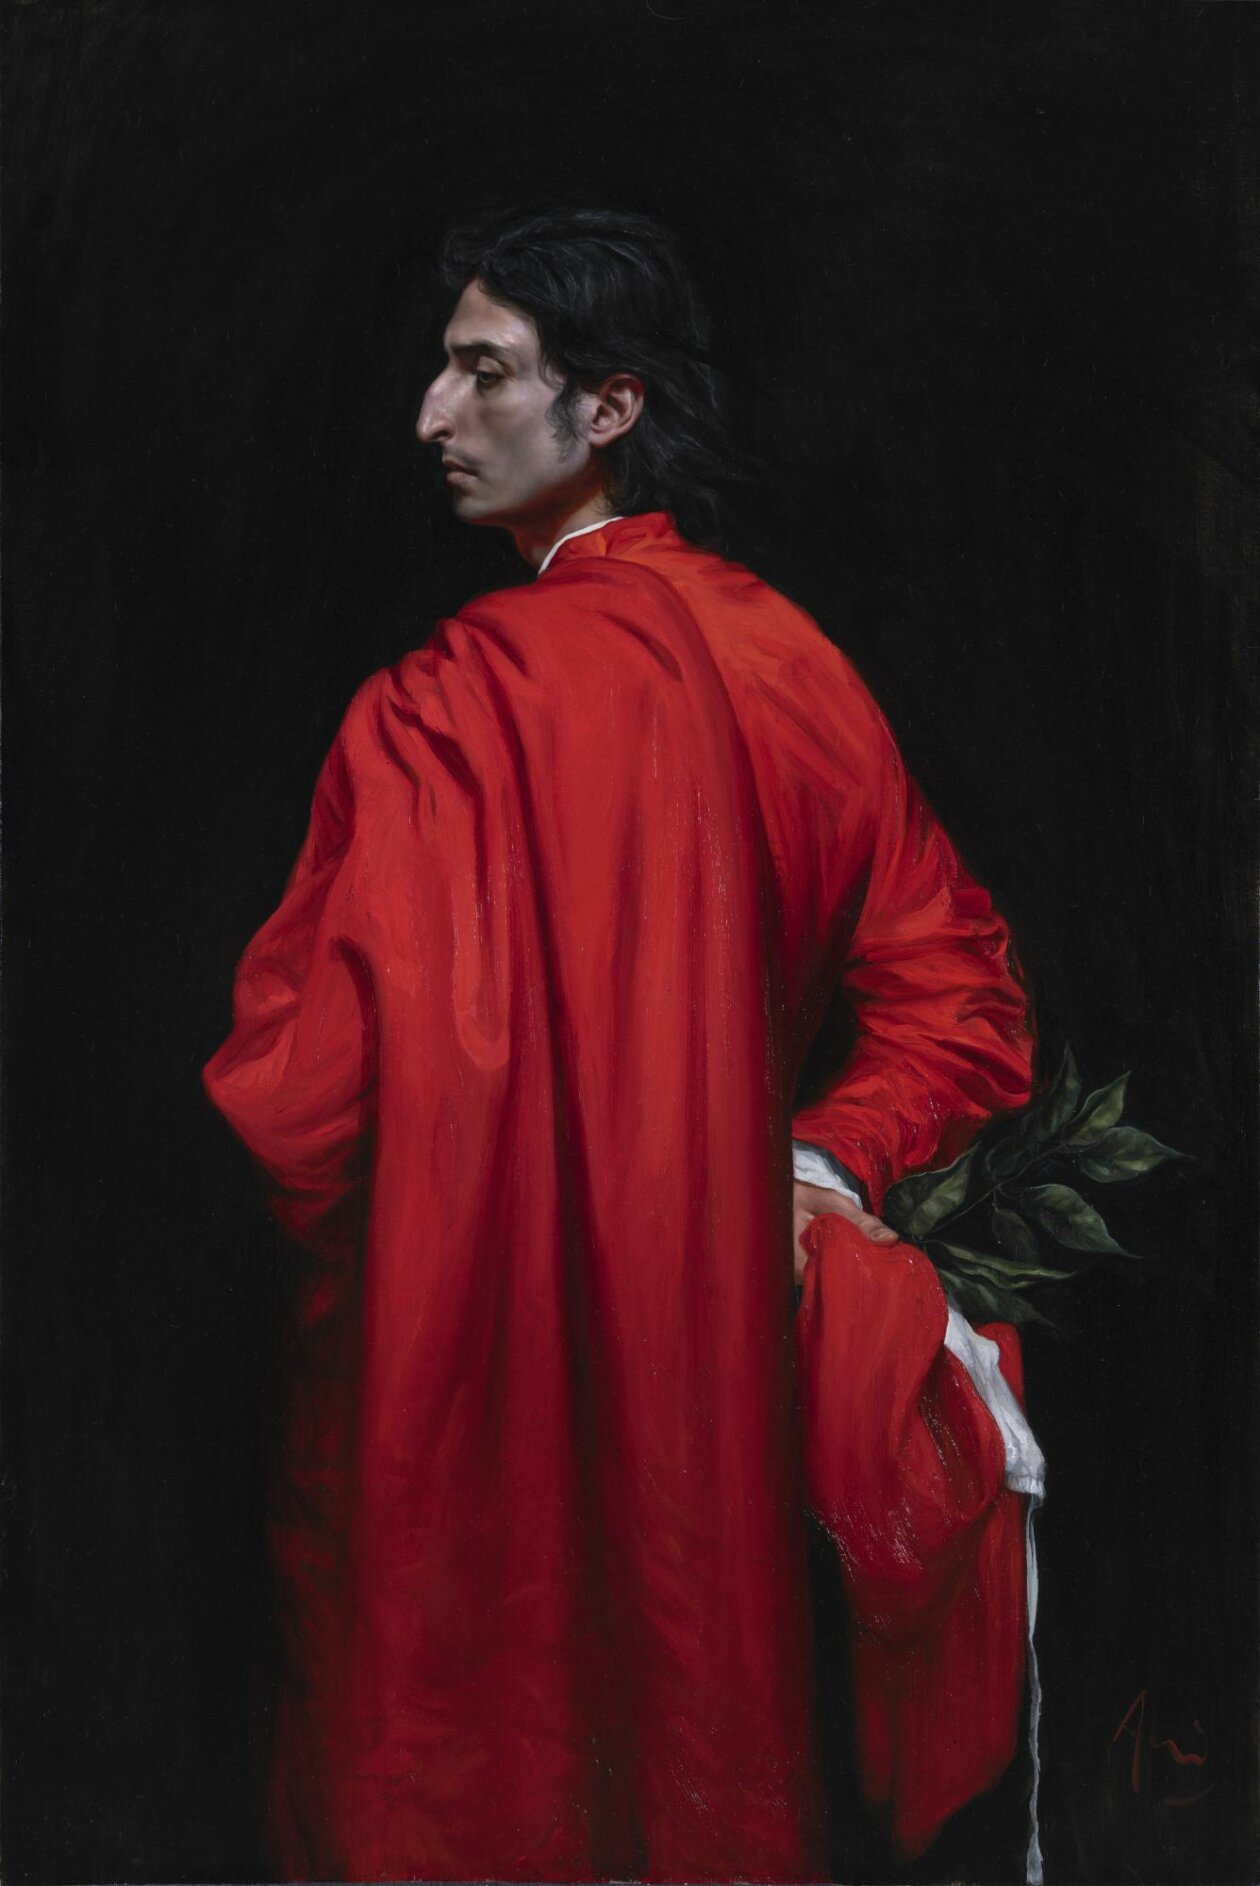 Exquisite Contemporary Classical Paintings By Jordi Diaz Alama Canto Ii Dante Si Volse A Retro 134 X 89cm